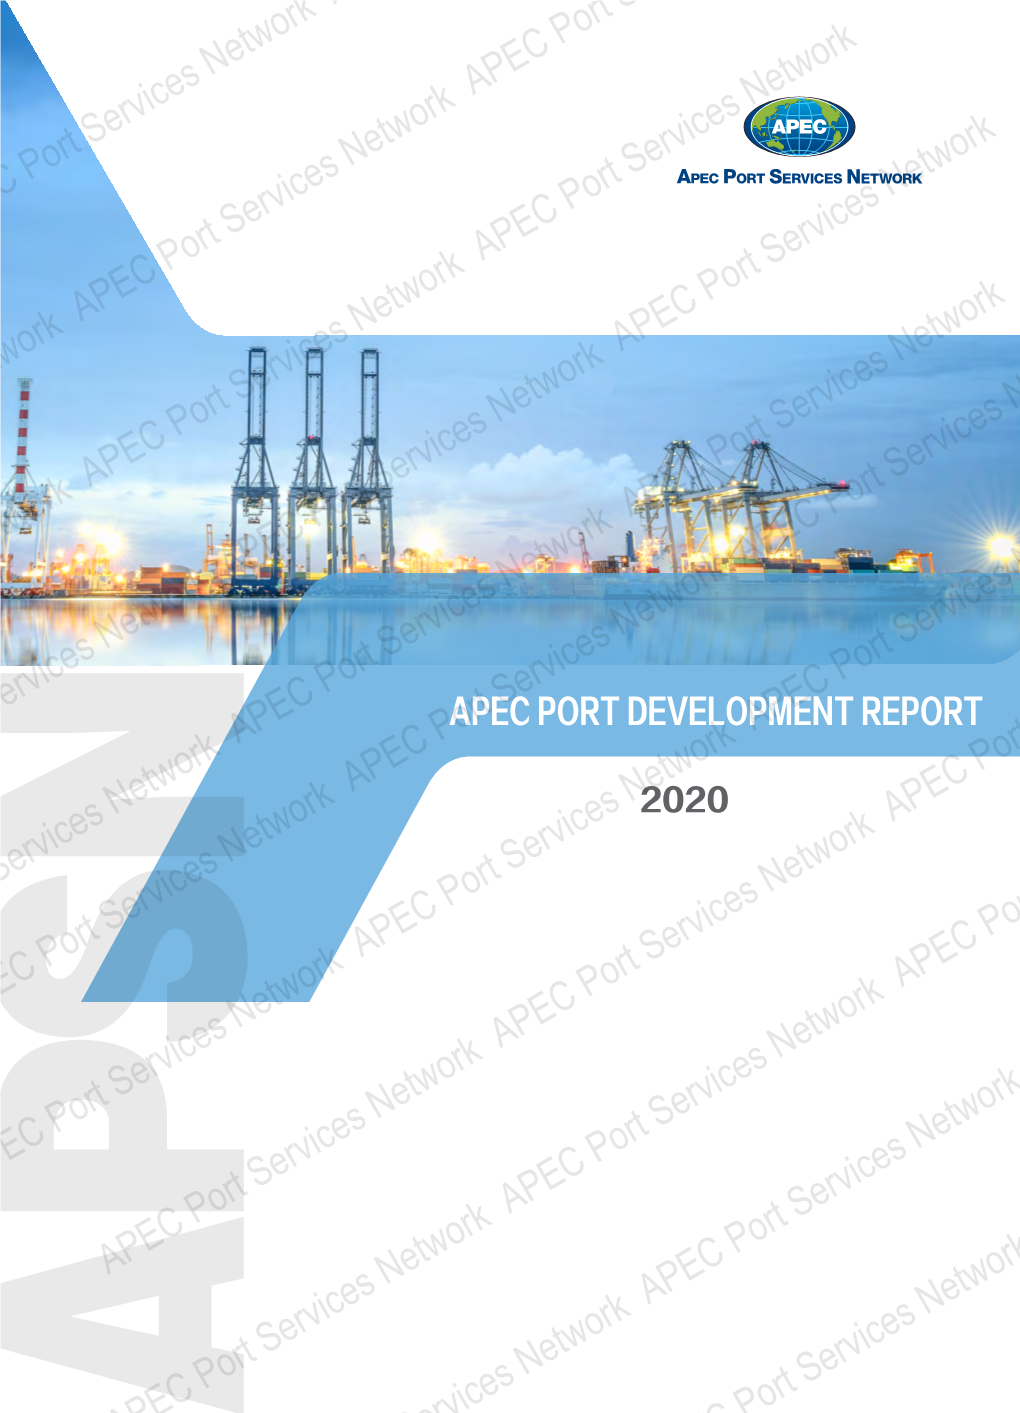 APEC Port Development Report 2020.Pdf